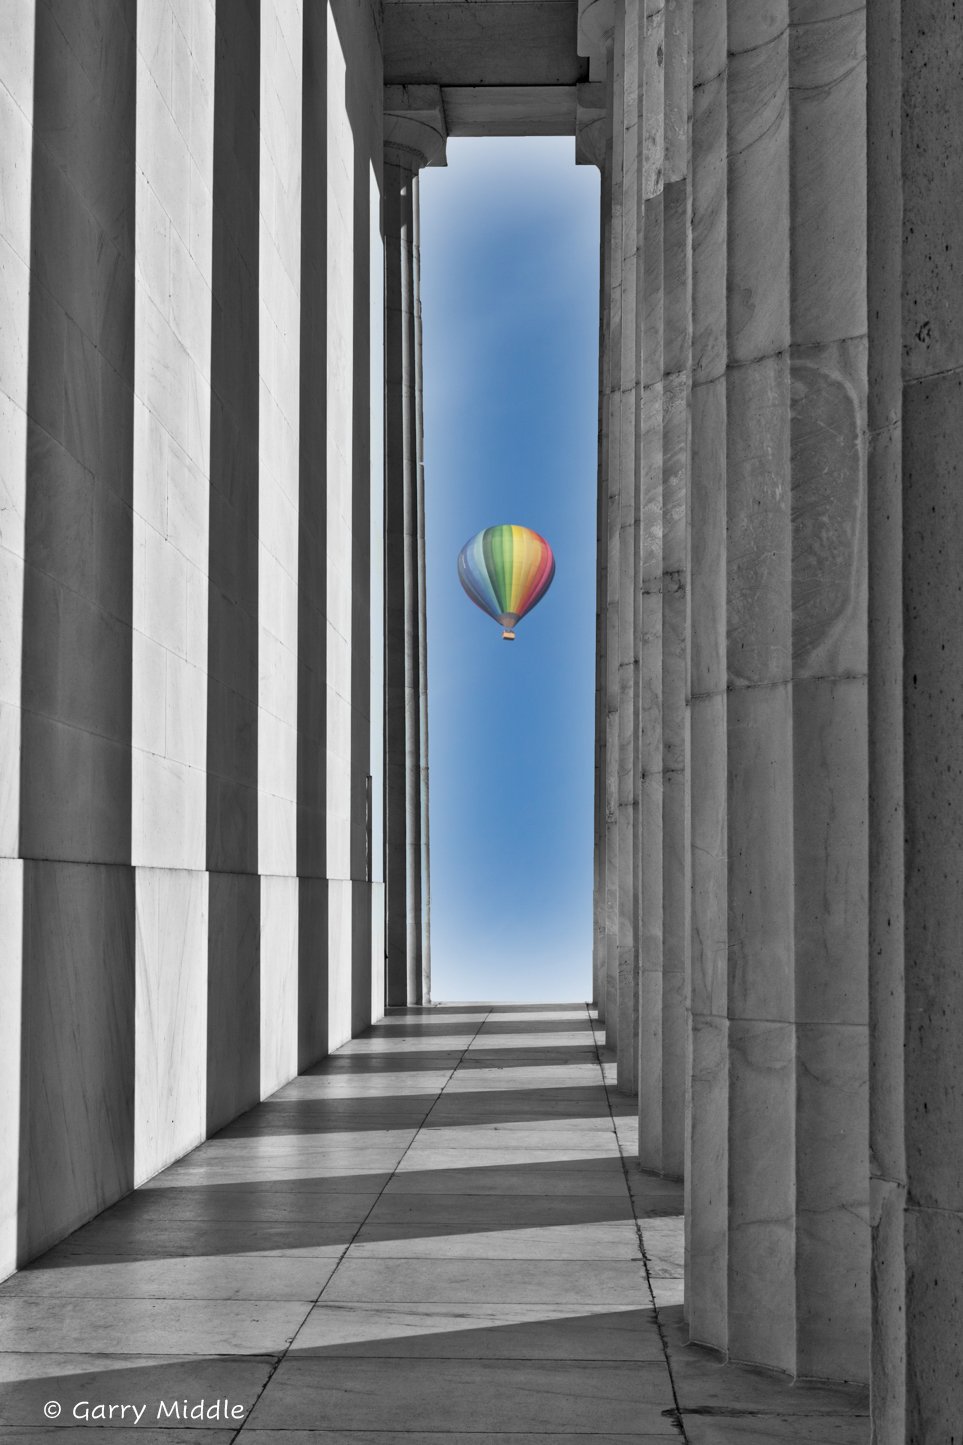 Medium_Lincoln pillar baloon.jpg